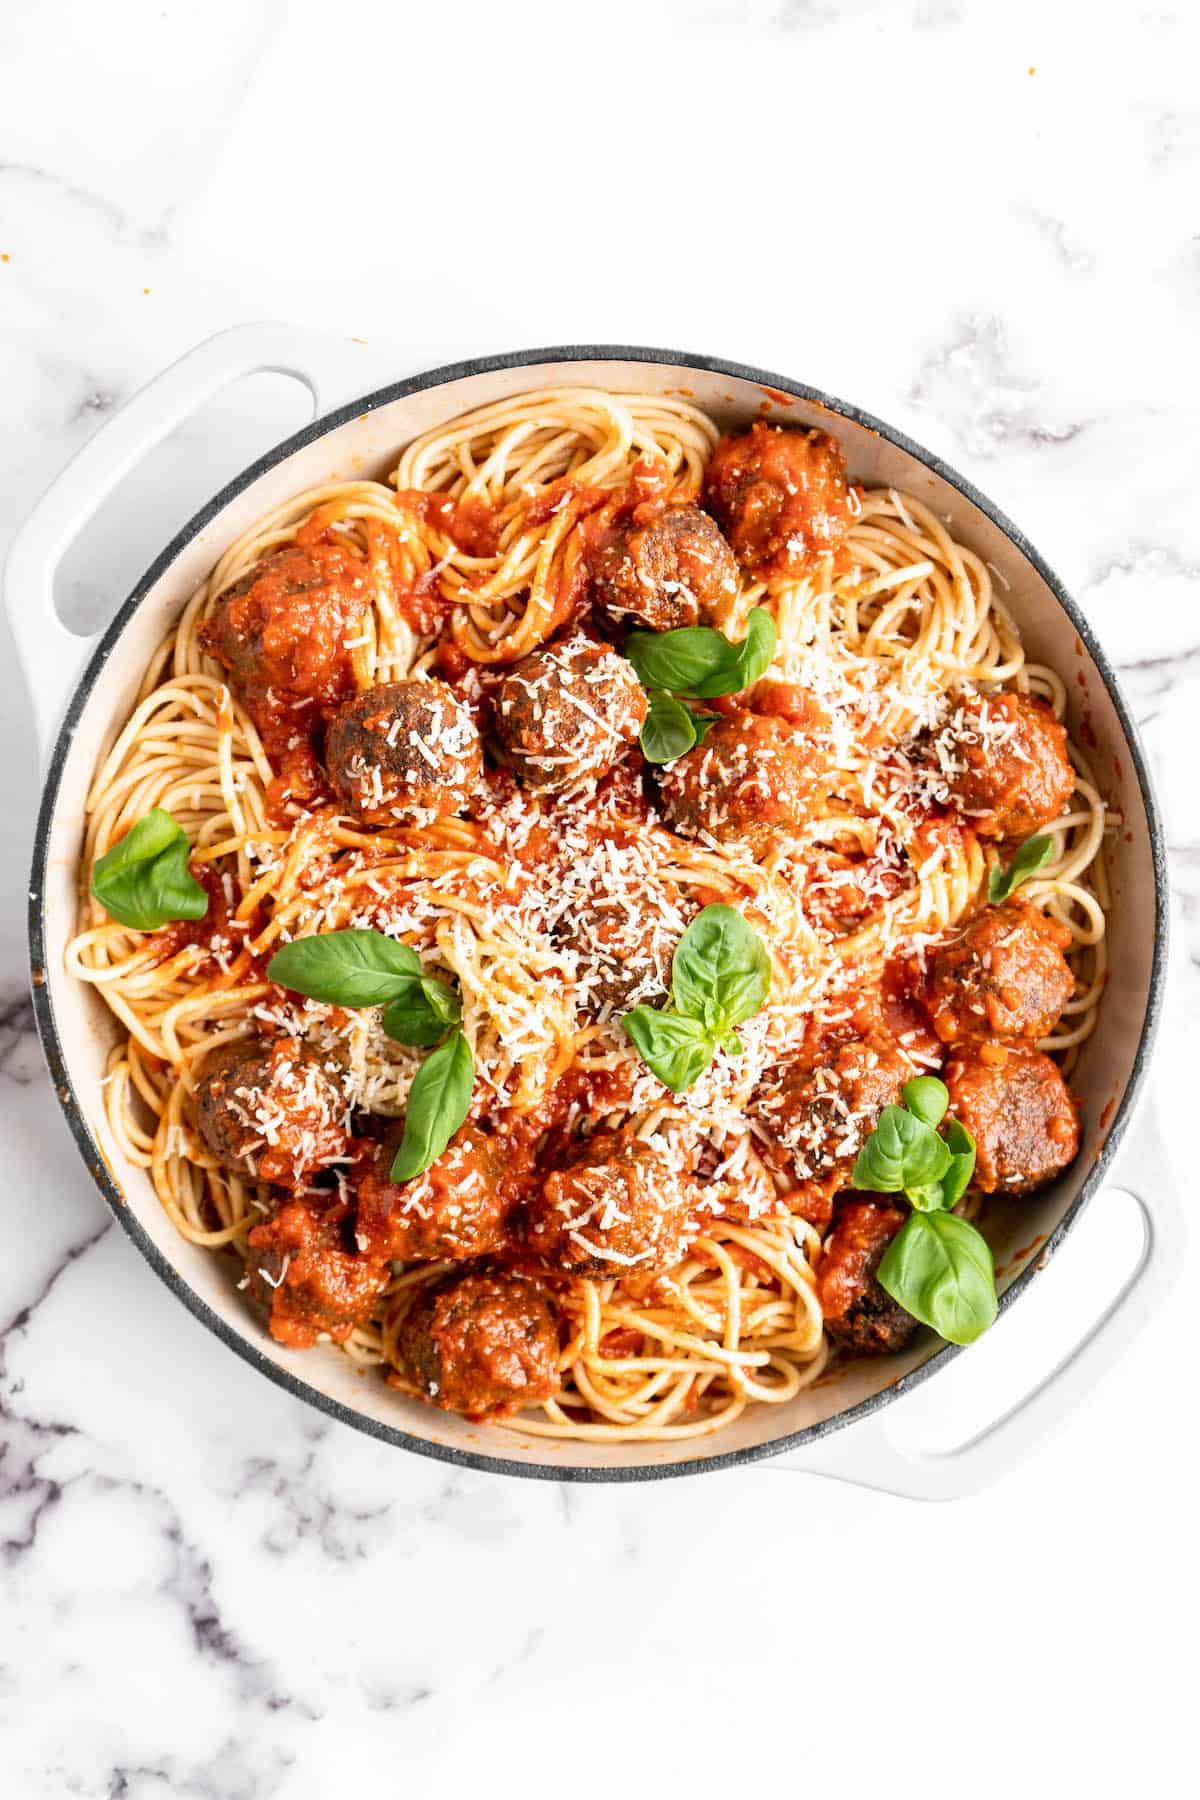 Pan of vegan spaghetti and meatballs with Parmesan and basil